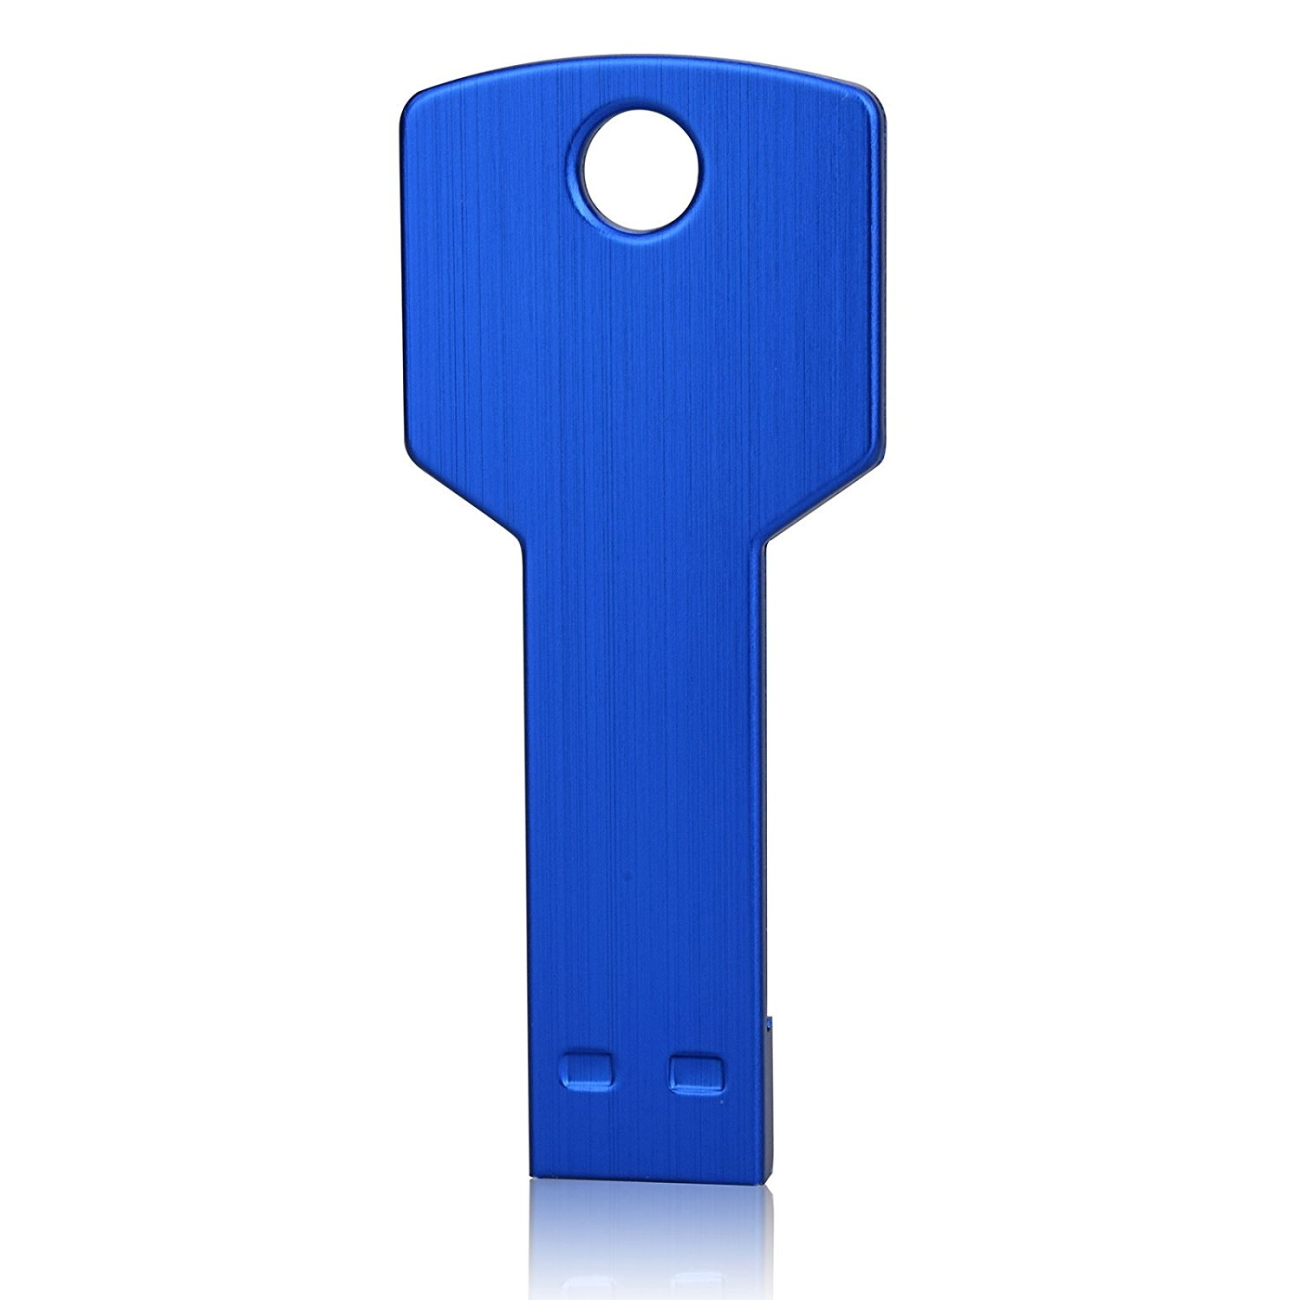 USB GERMANY Key Blau 128GB GB) USB-Stick 128 (Blau